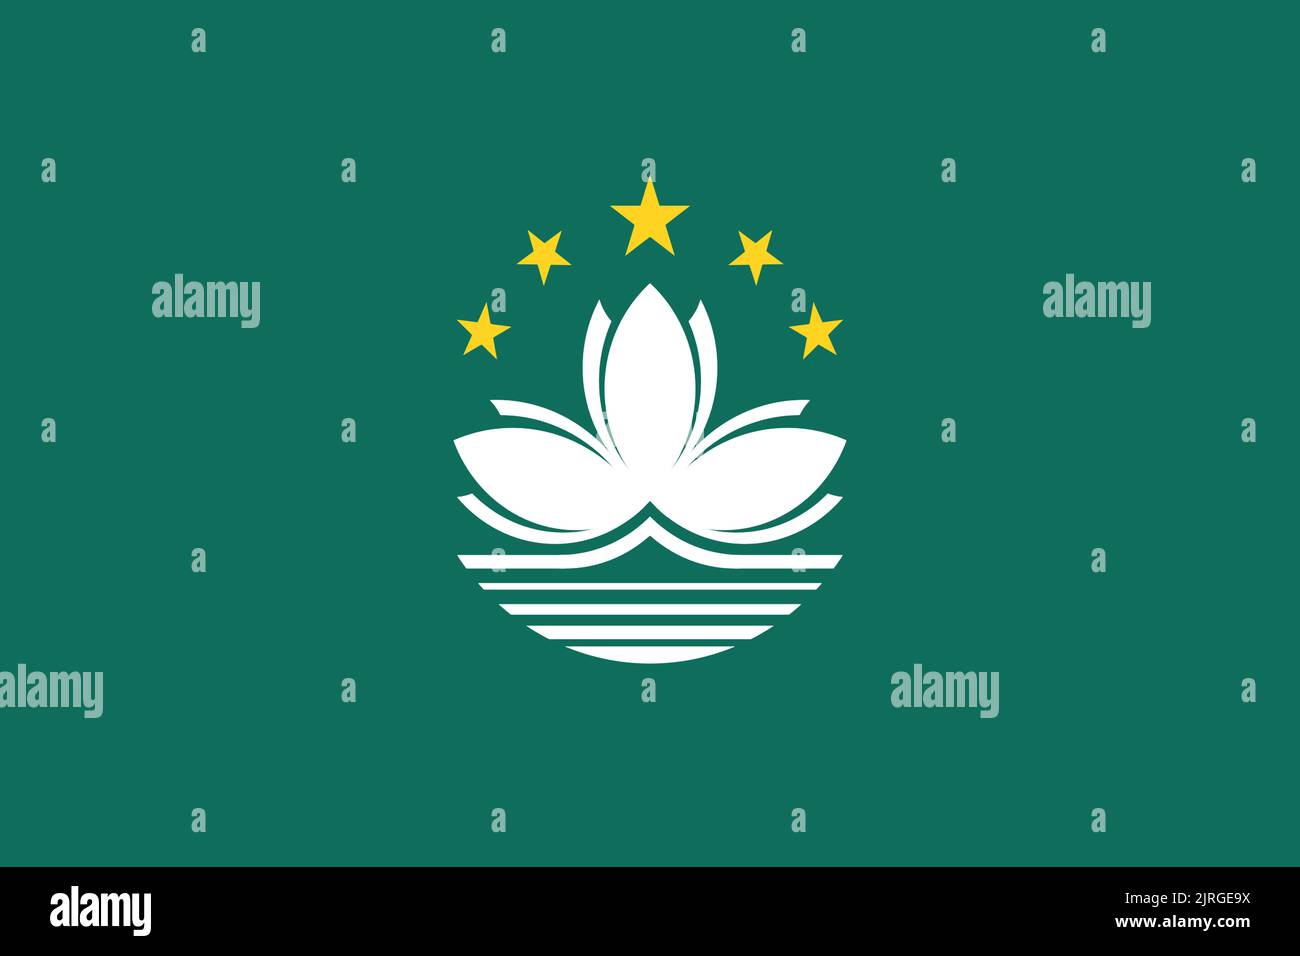 Macao flag background illustration green yellow stars white lotus Stock Photo